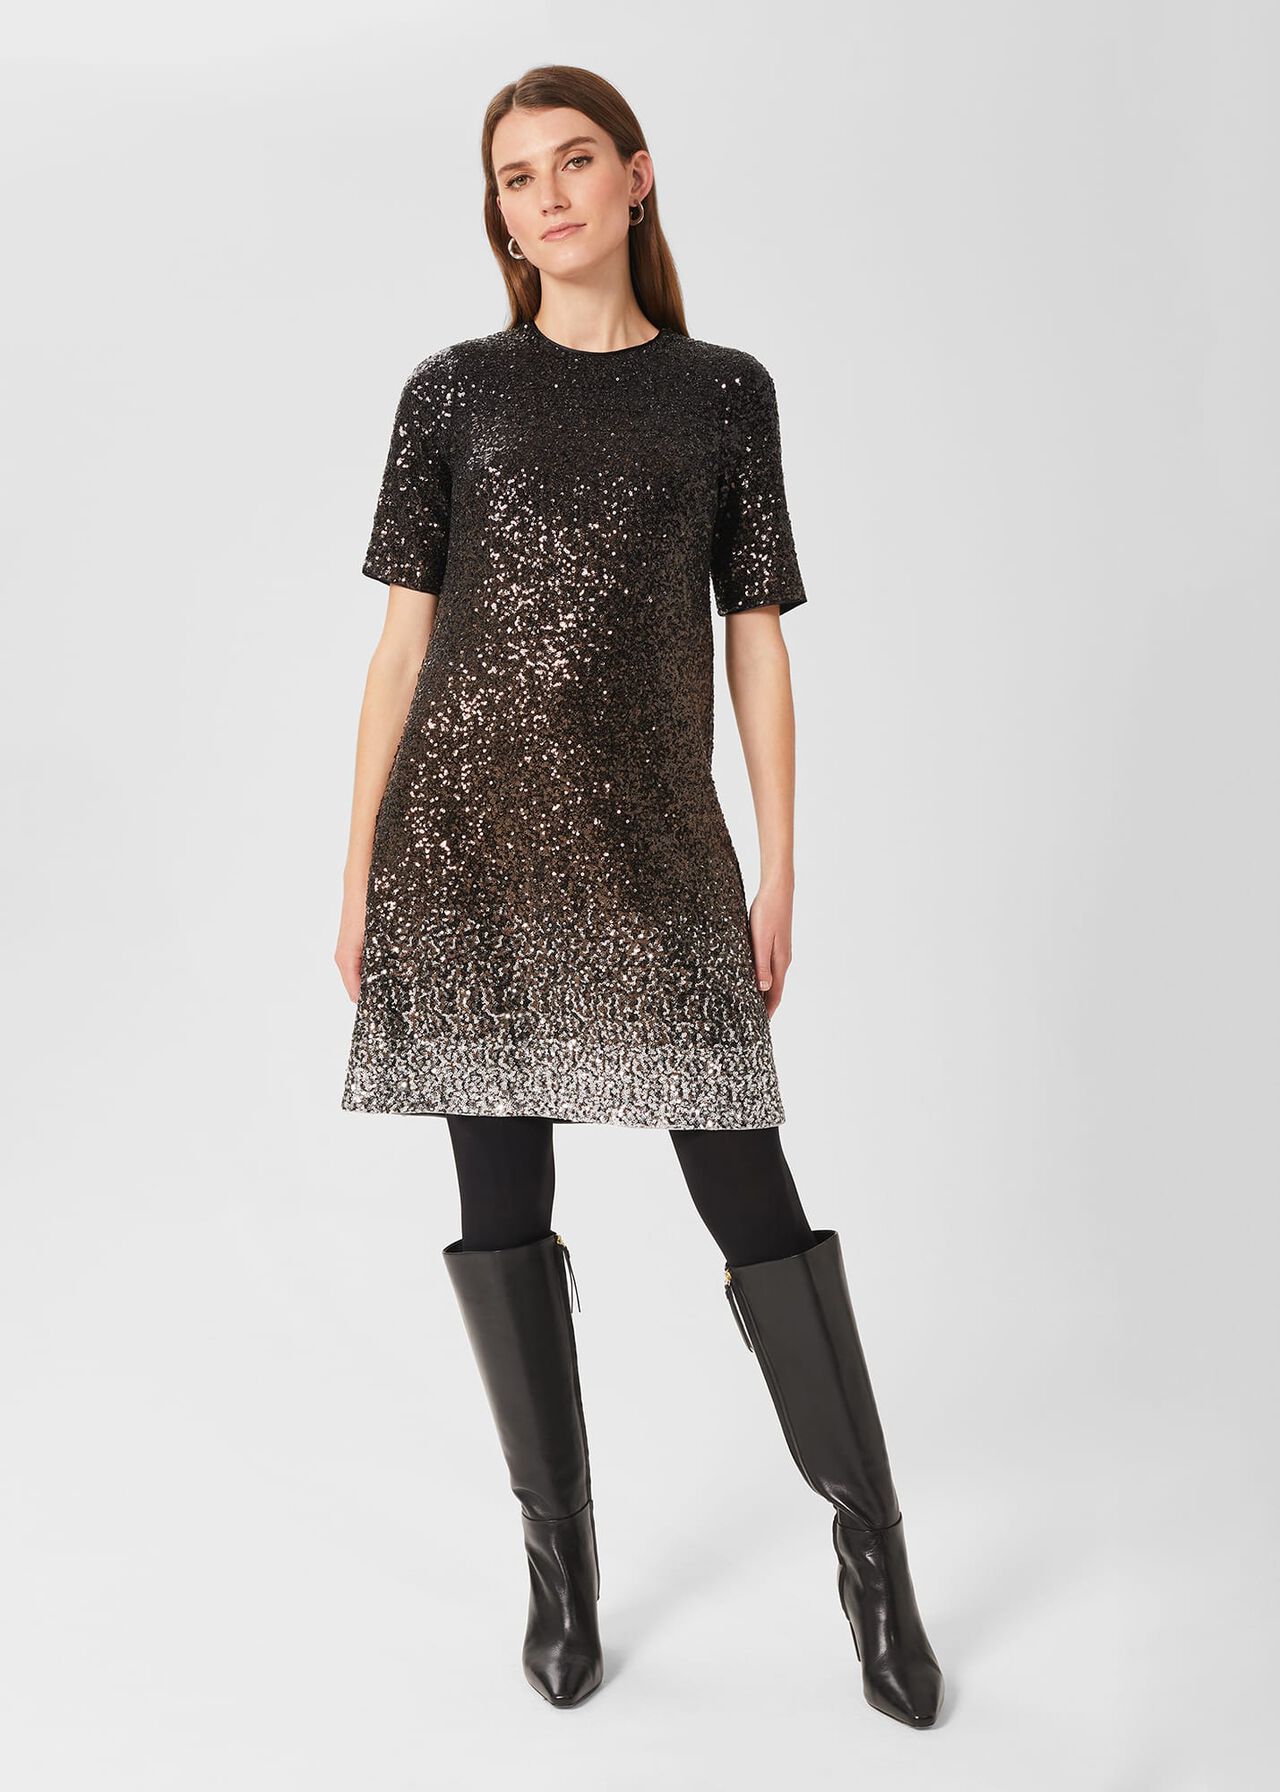 Reece Sequin A Line Dress, Black Silver, hi-res